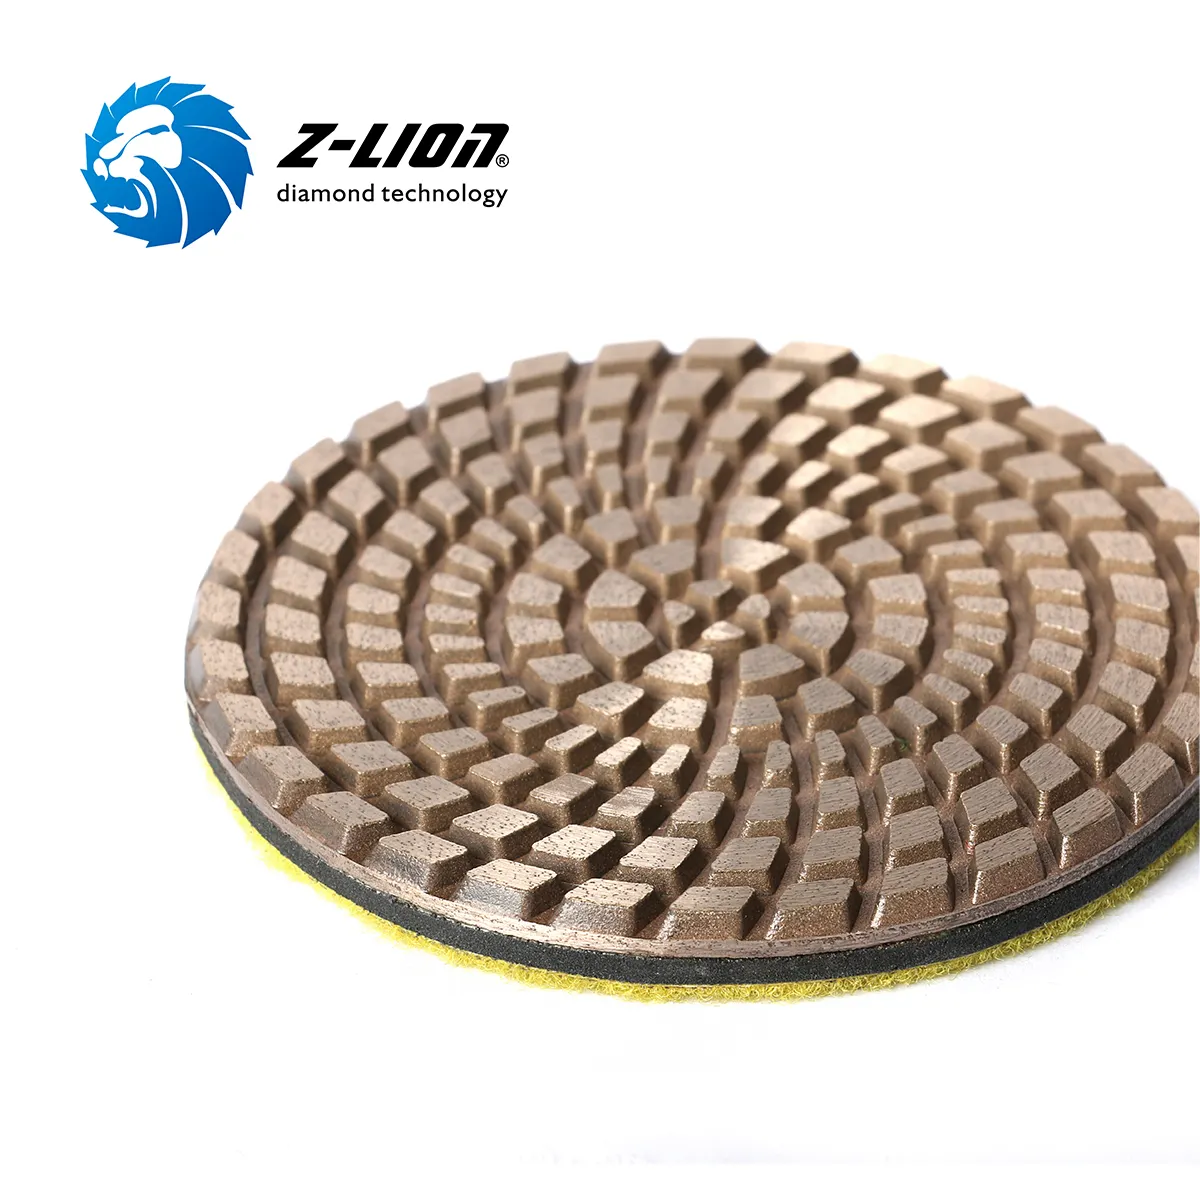 Z-LION 4" Metal Bond Diamond Concrete Floor Polishing/Grinding Pad For Seven Step Wet Use